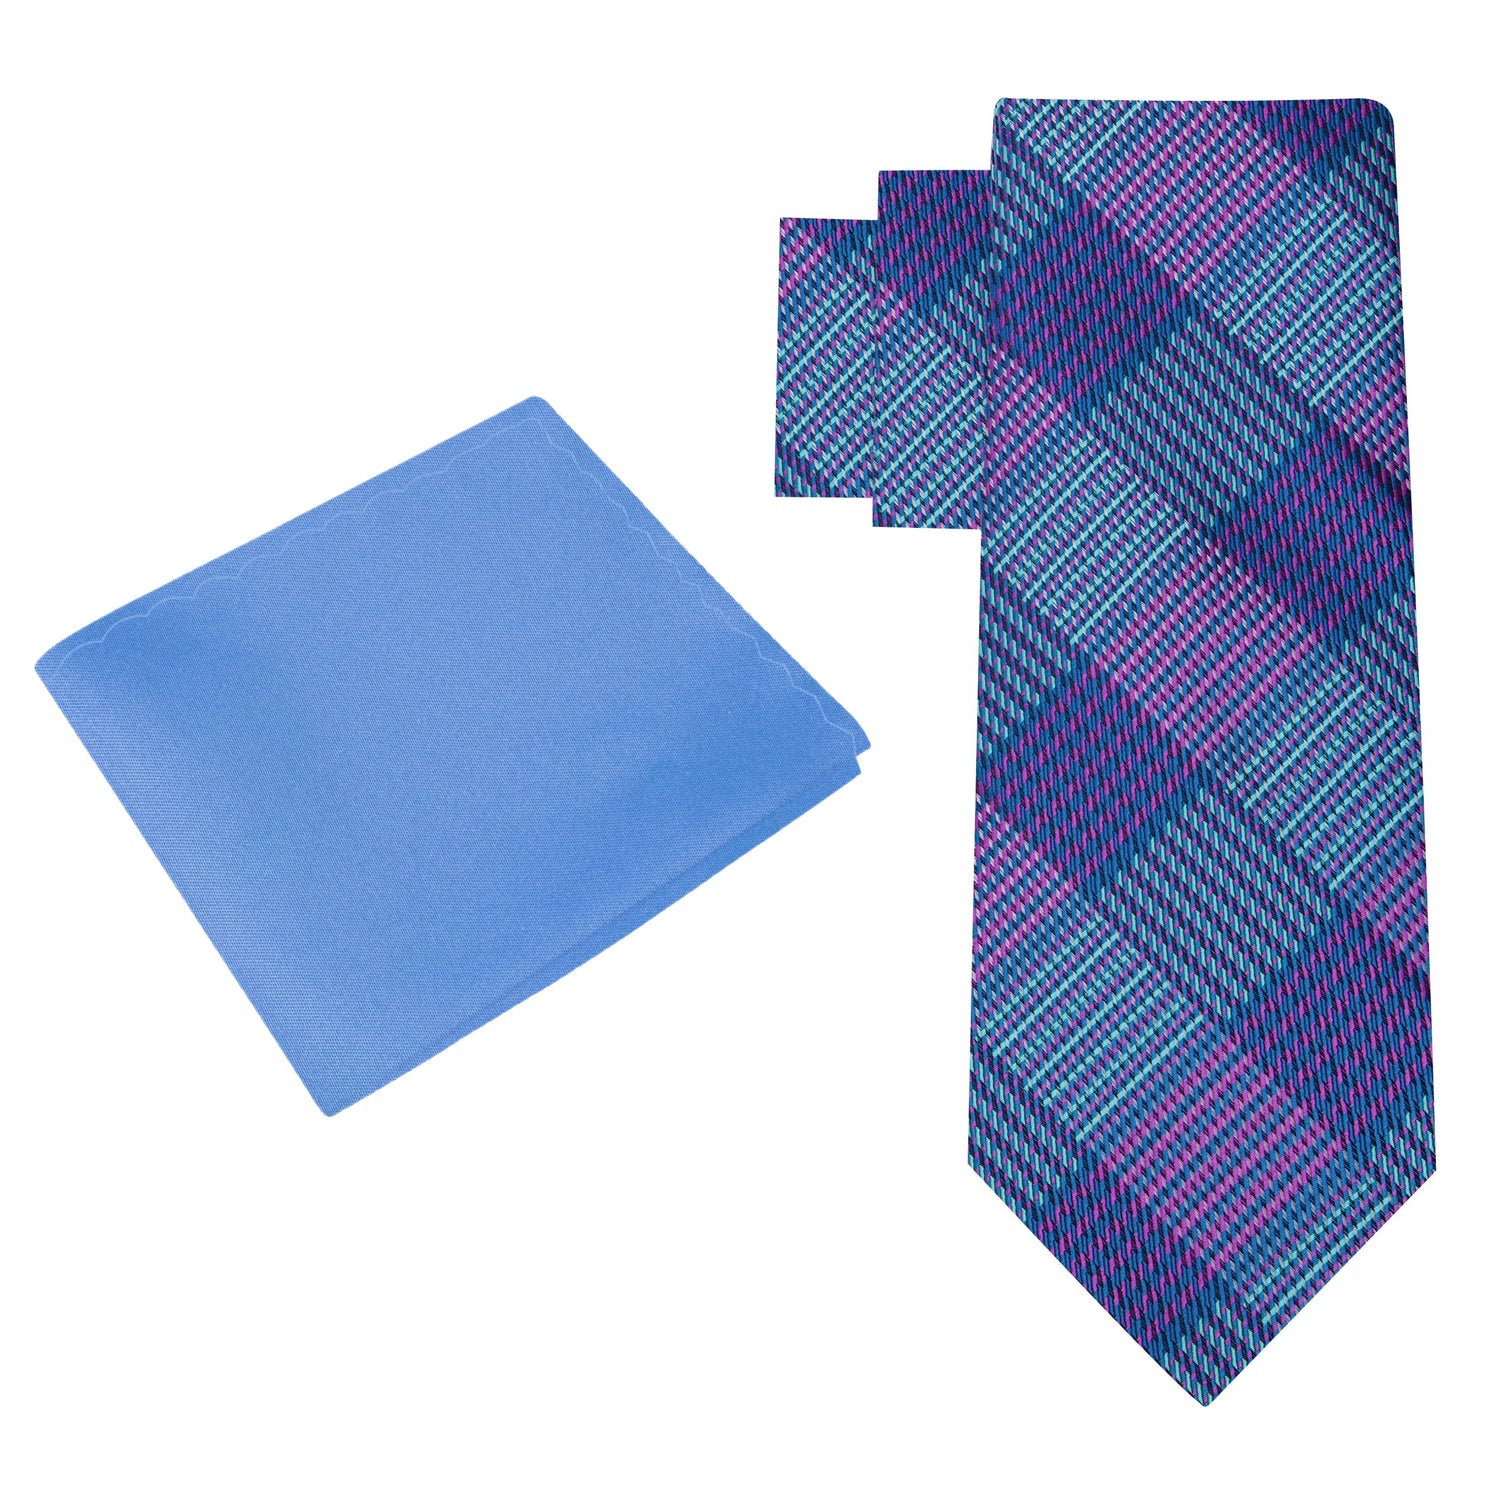 Alt View: Blue and Purple Plaid Tie and Blue Square